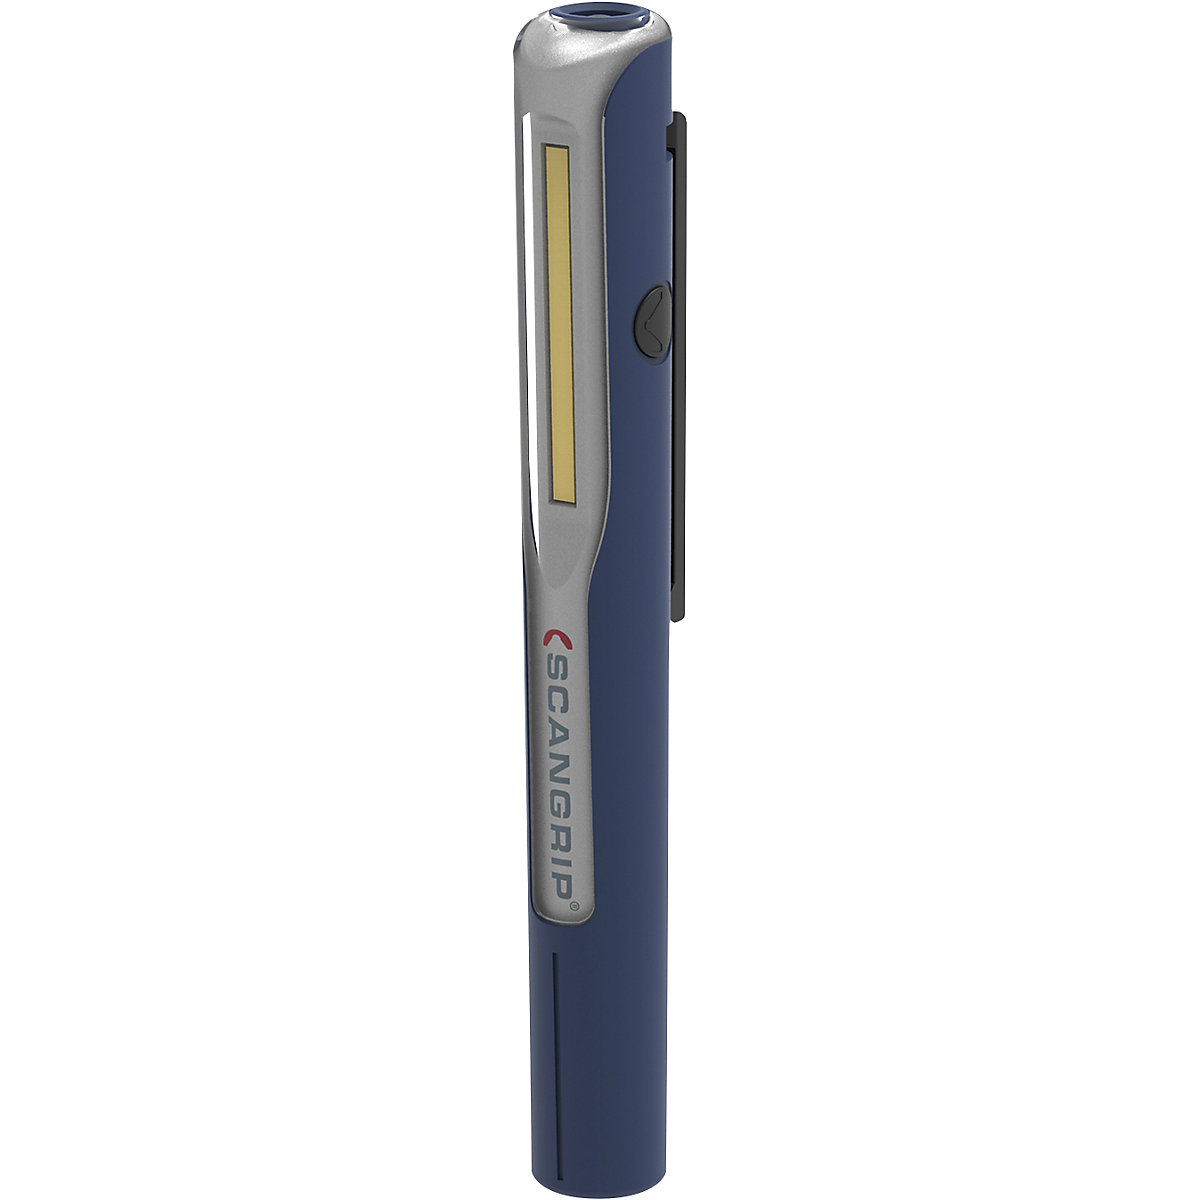 Akumulatorowa latarka długopisowa LED MAG PEN 3 – SCANGRIP (Zdjęcie produktu 6)-5